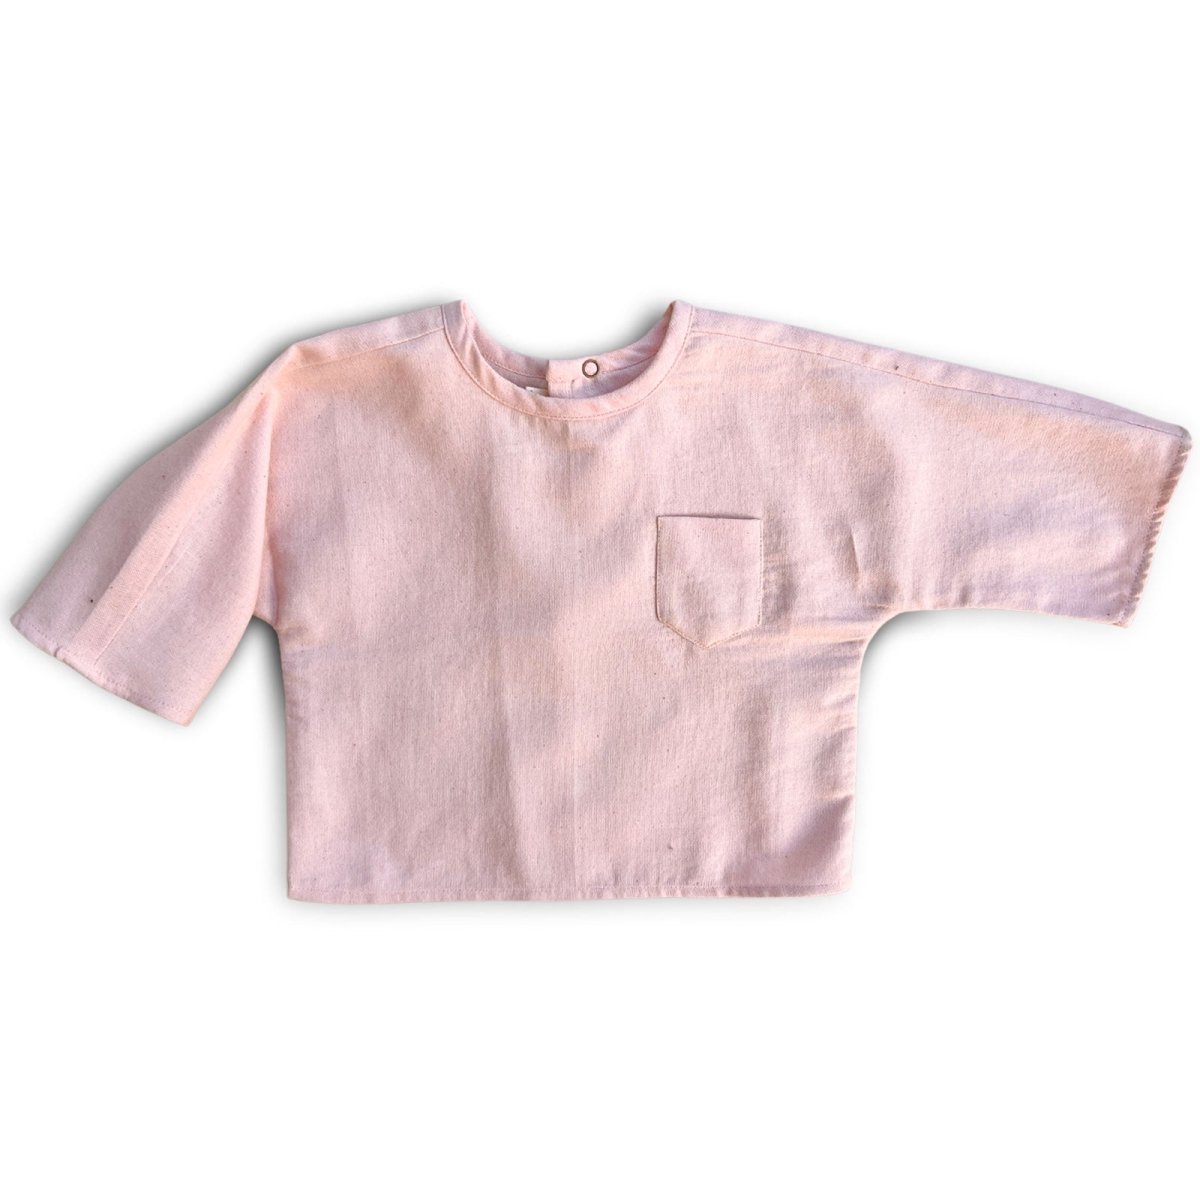 Alyssum Pink Organic Cotton Pocket Top - Beya MadeTOP